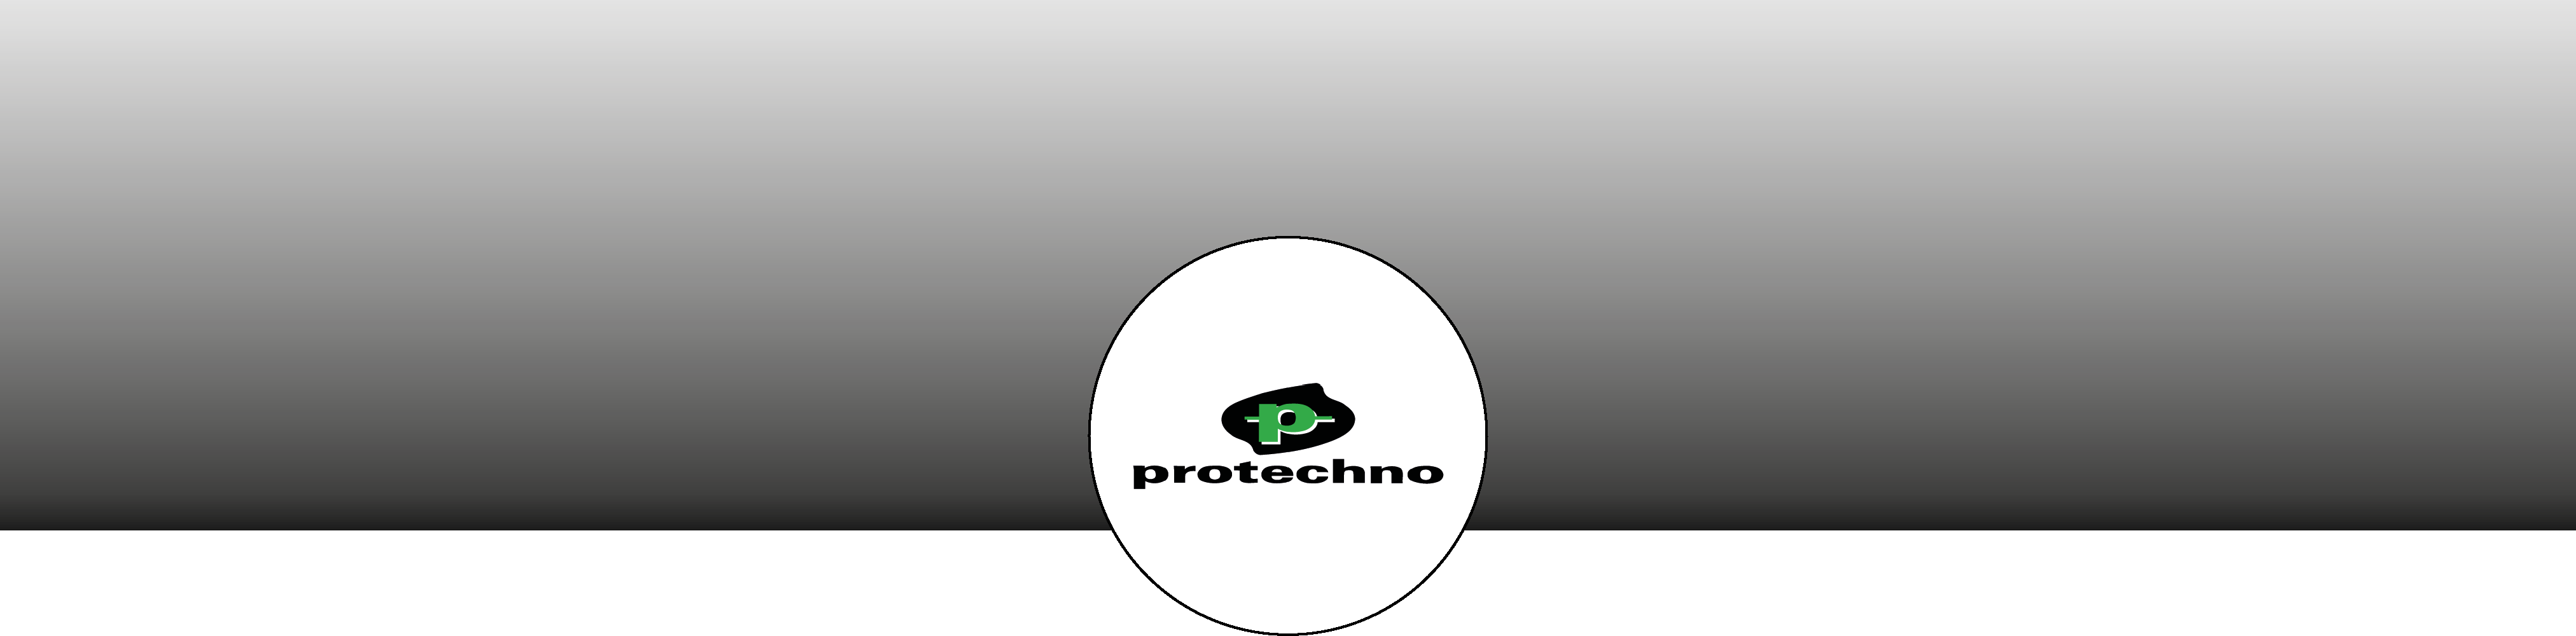 banner_protechno